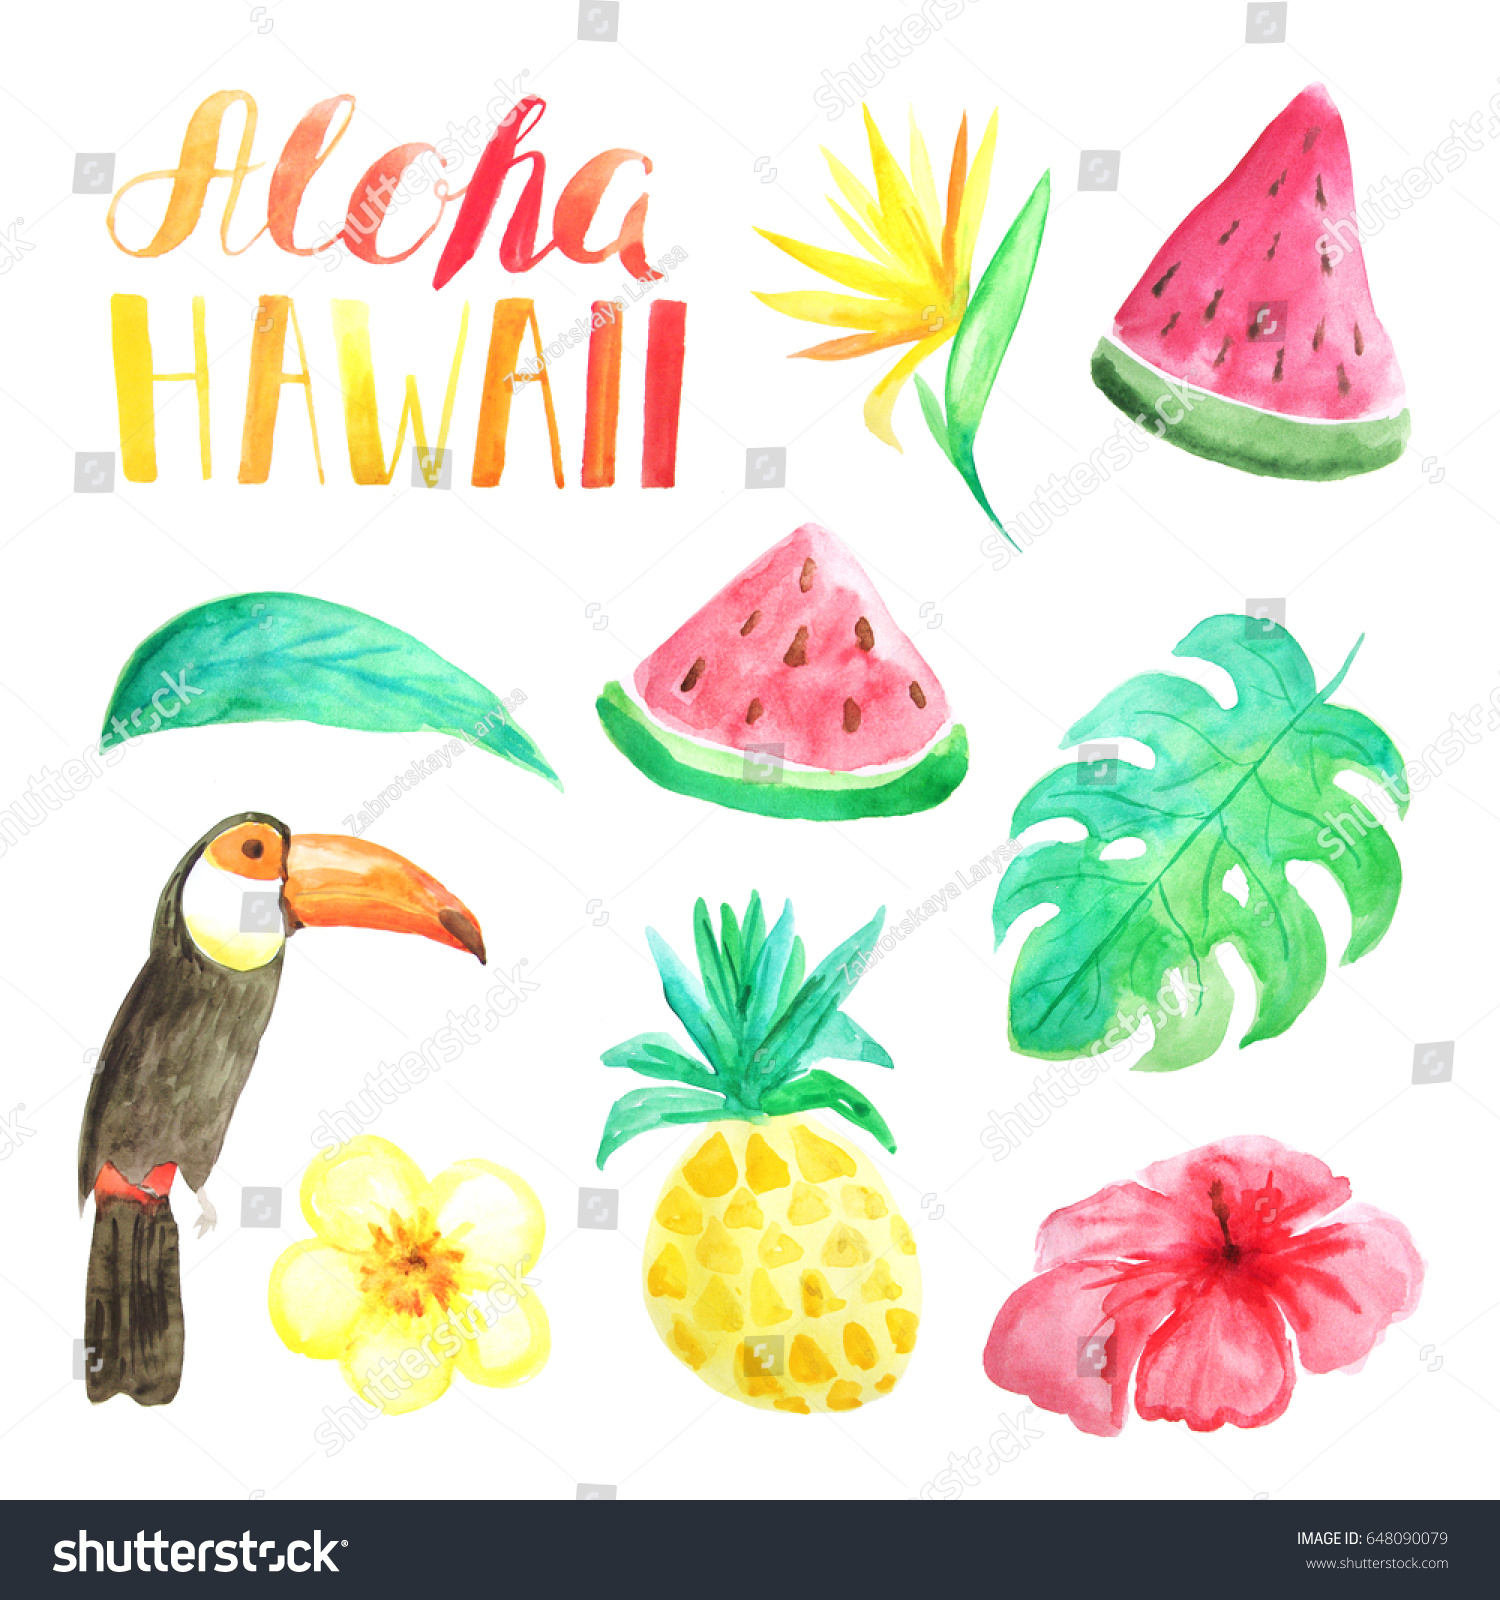 Watercolor aloha Aloha Pineapple Print Pineapple painting Aloha painting Pineapple drawing Watercolor pineapple